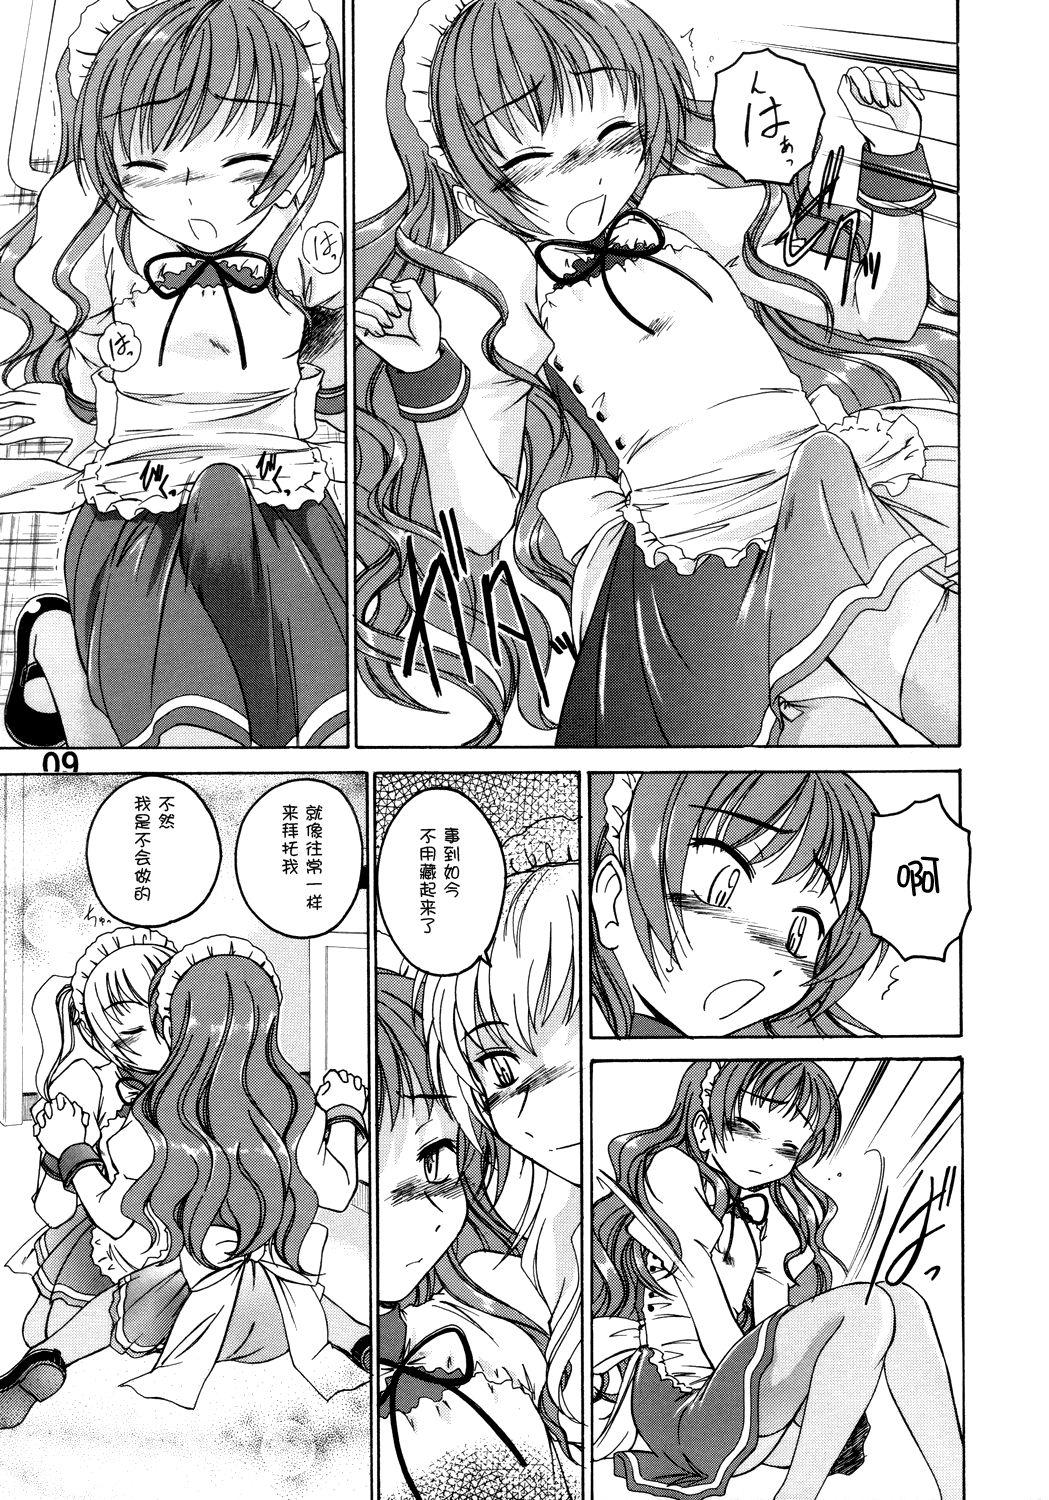 Sensual Manga Sangyou Haikibutsu 11 - Comic Industrial Wastes 11 - Princess princess Femdom Pov - Page 8